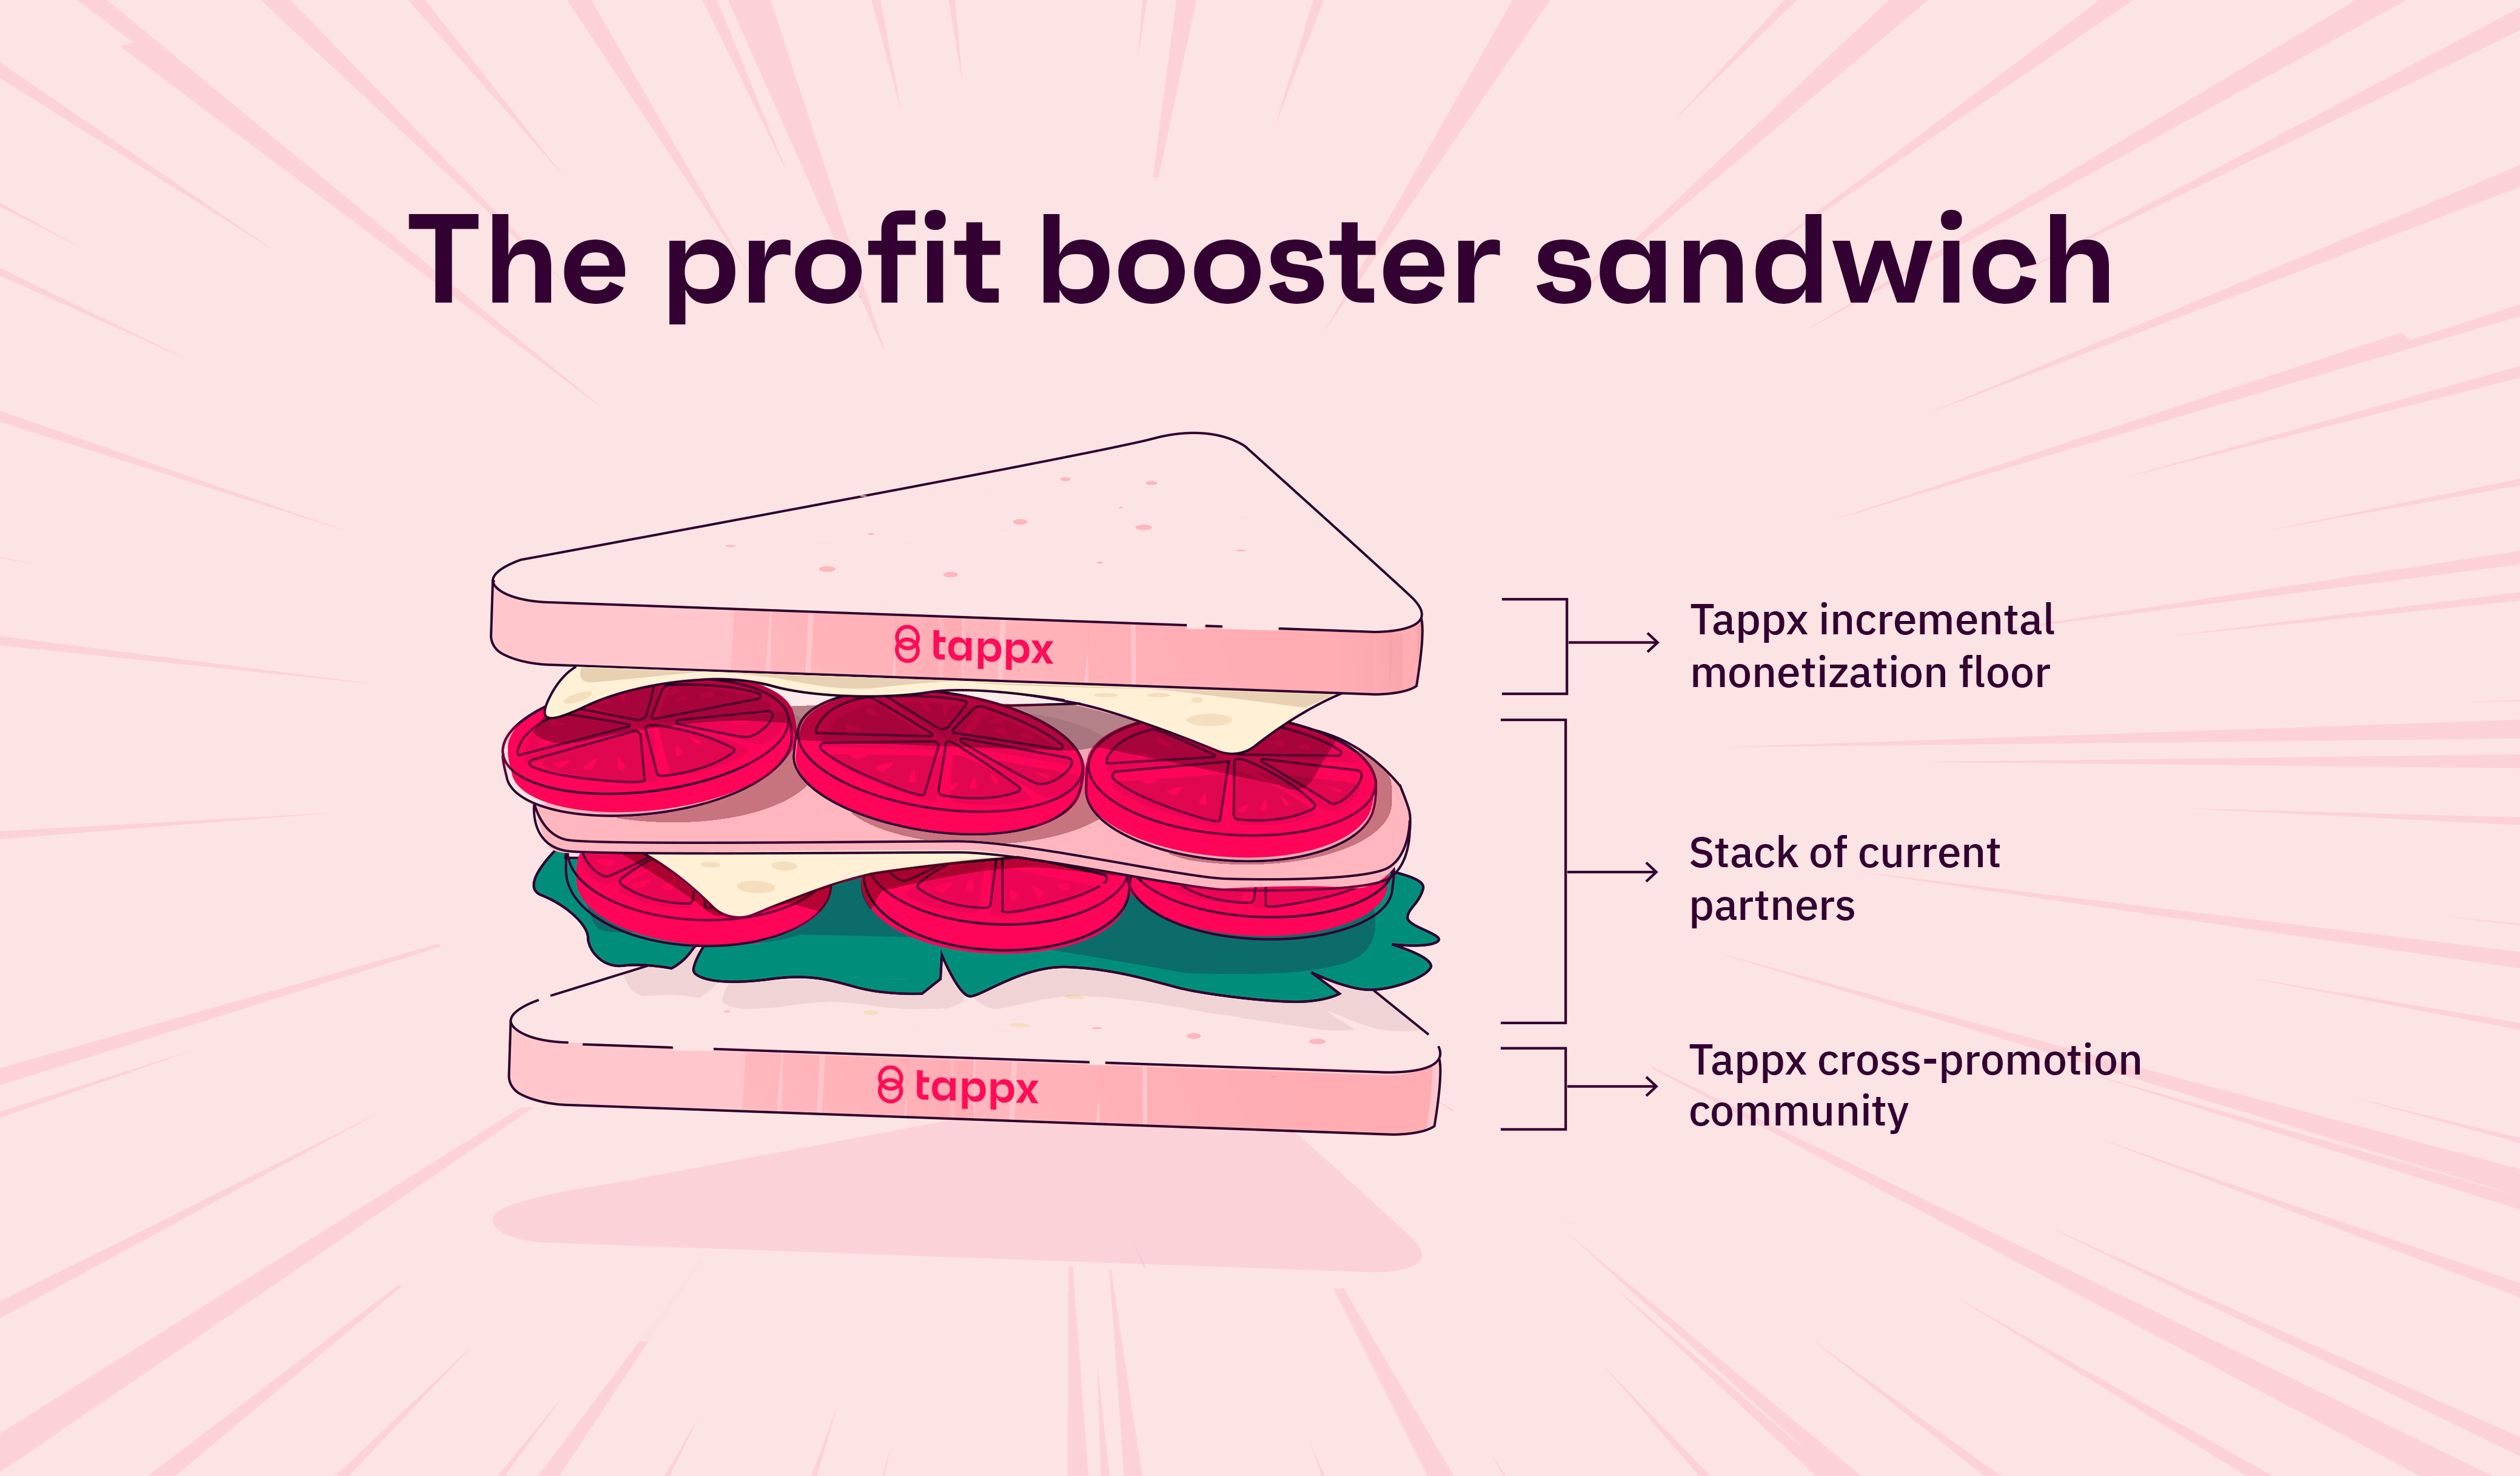 The profit booster sandwich is a Tappx's zero waste app monetization approach.